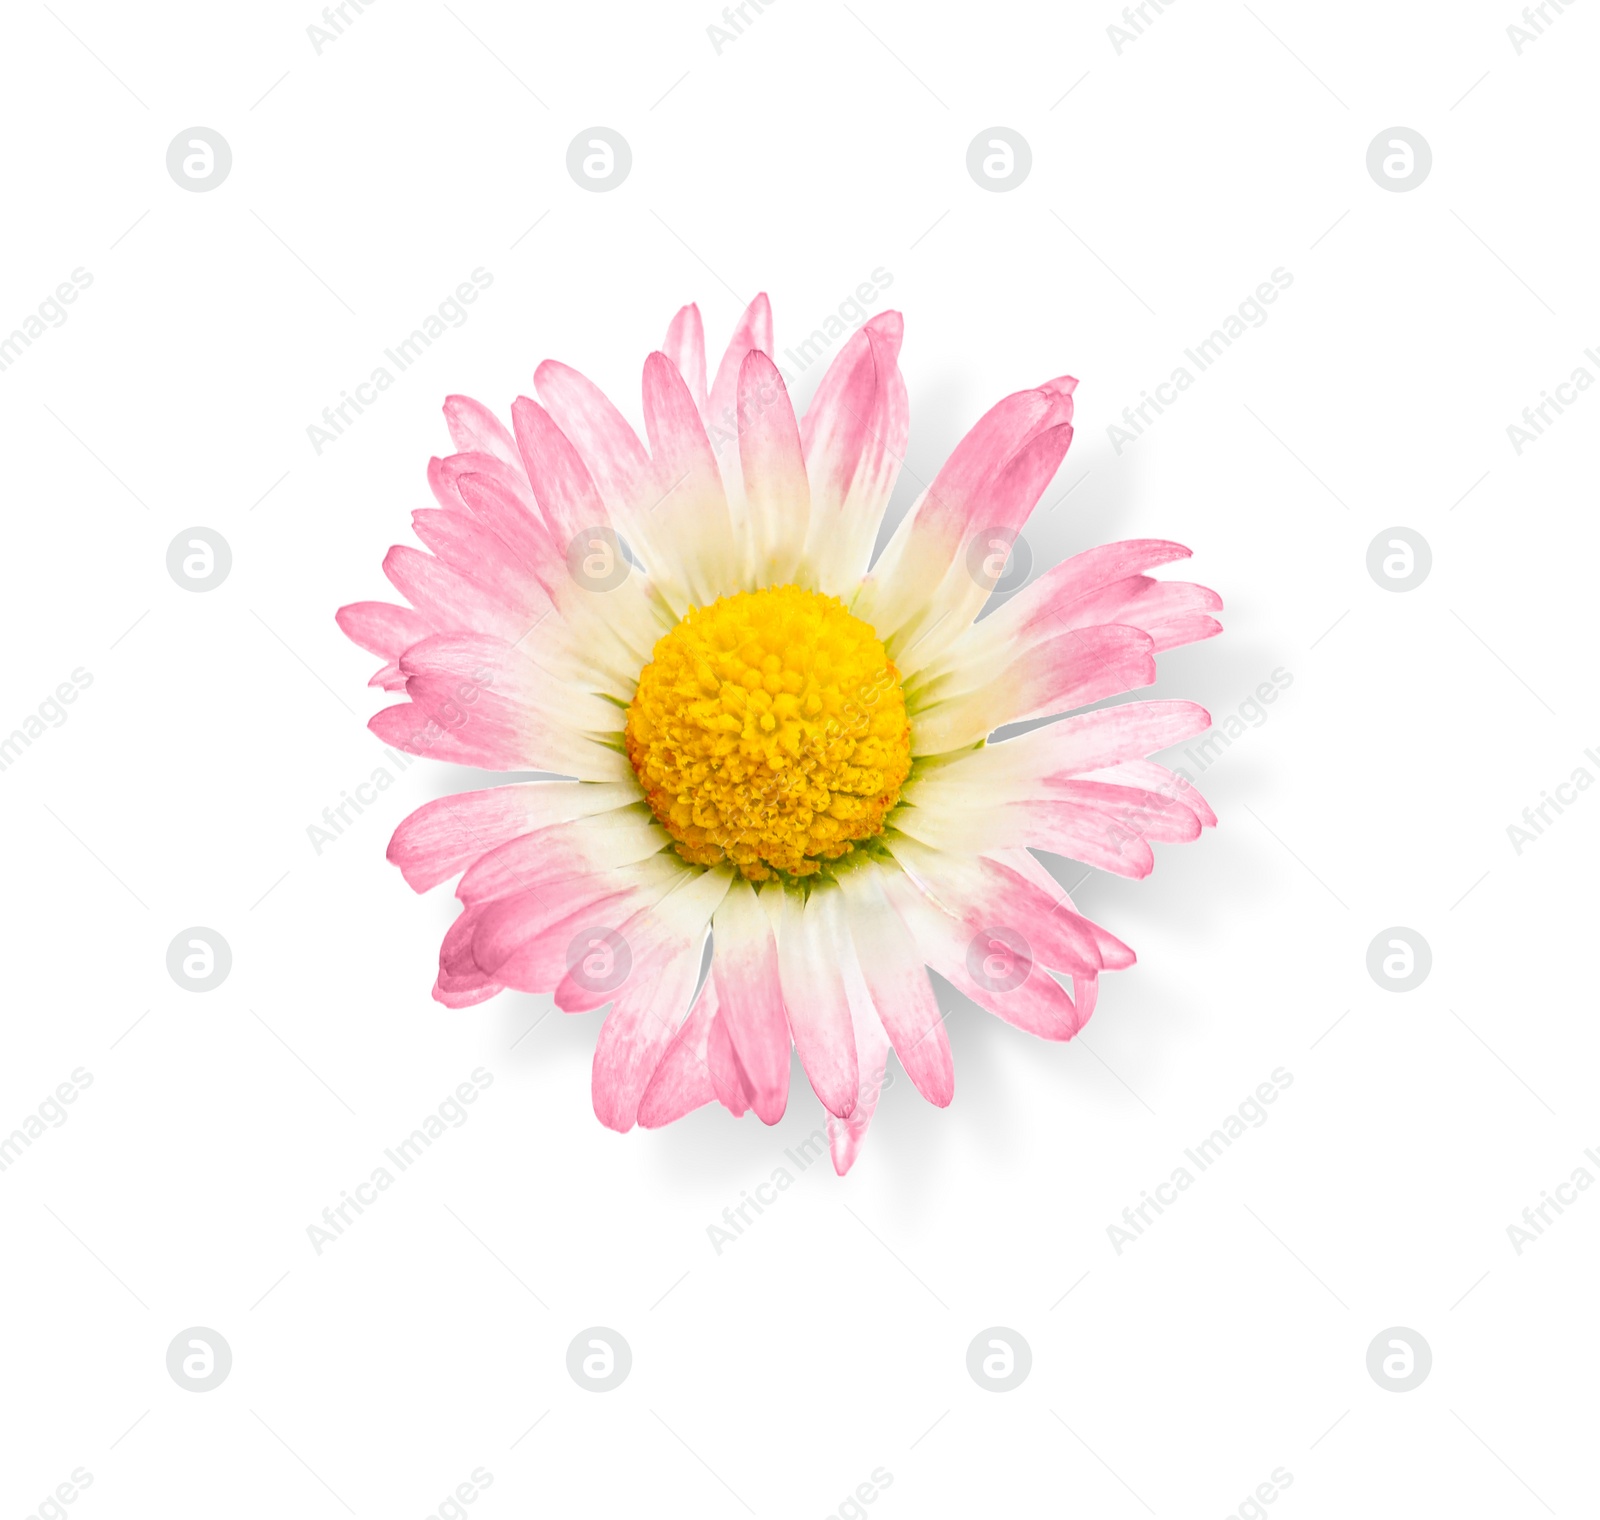 Photo of One beautiful daisy flower on white background